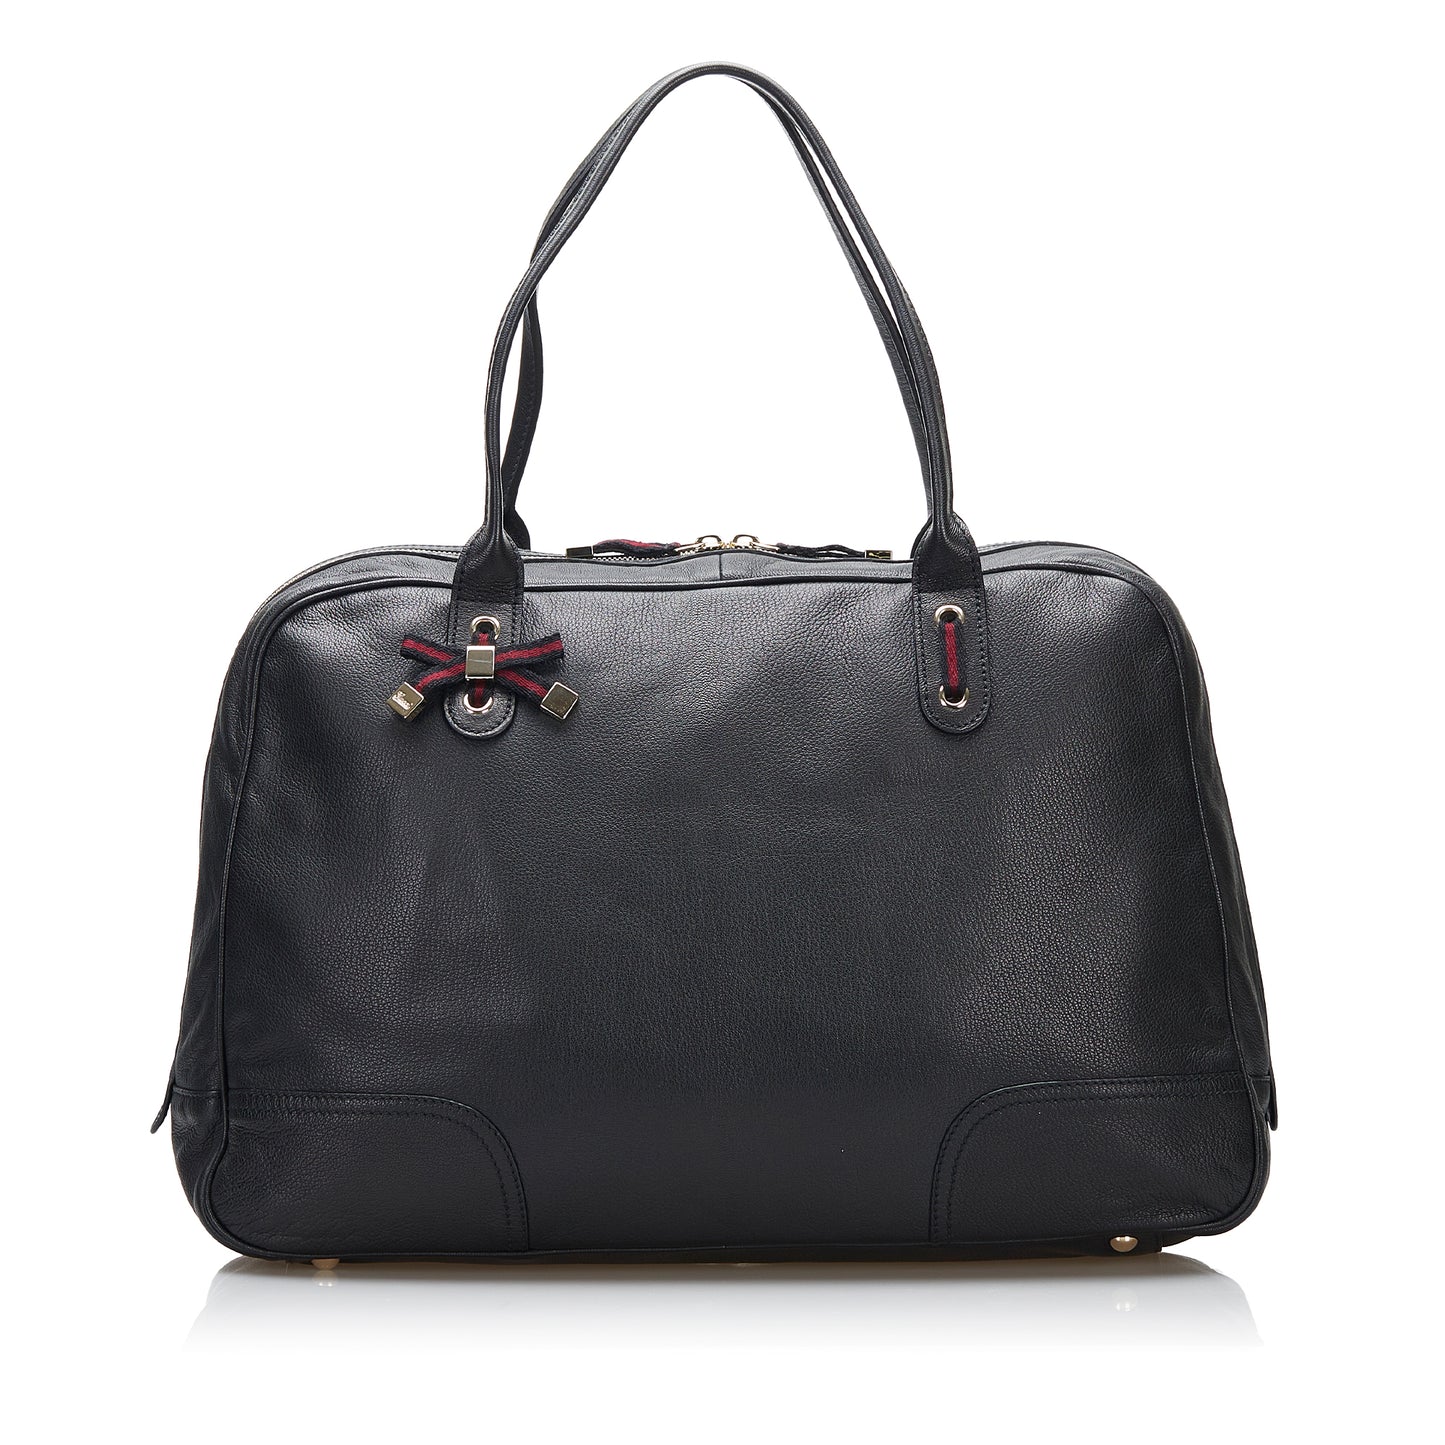 Princy Leather Travel Bag